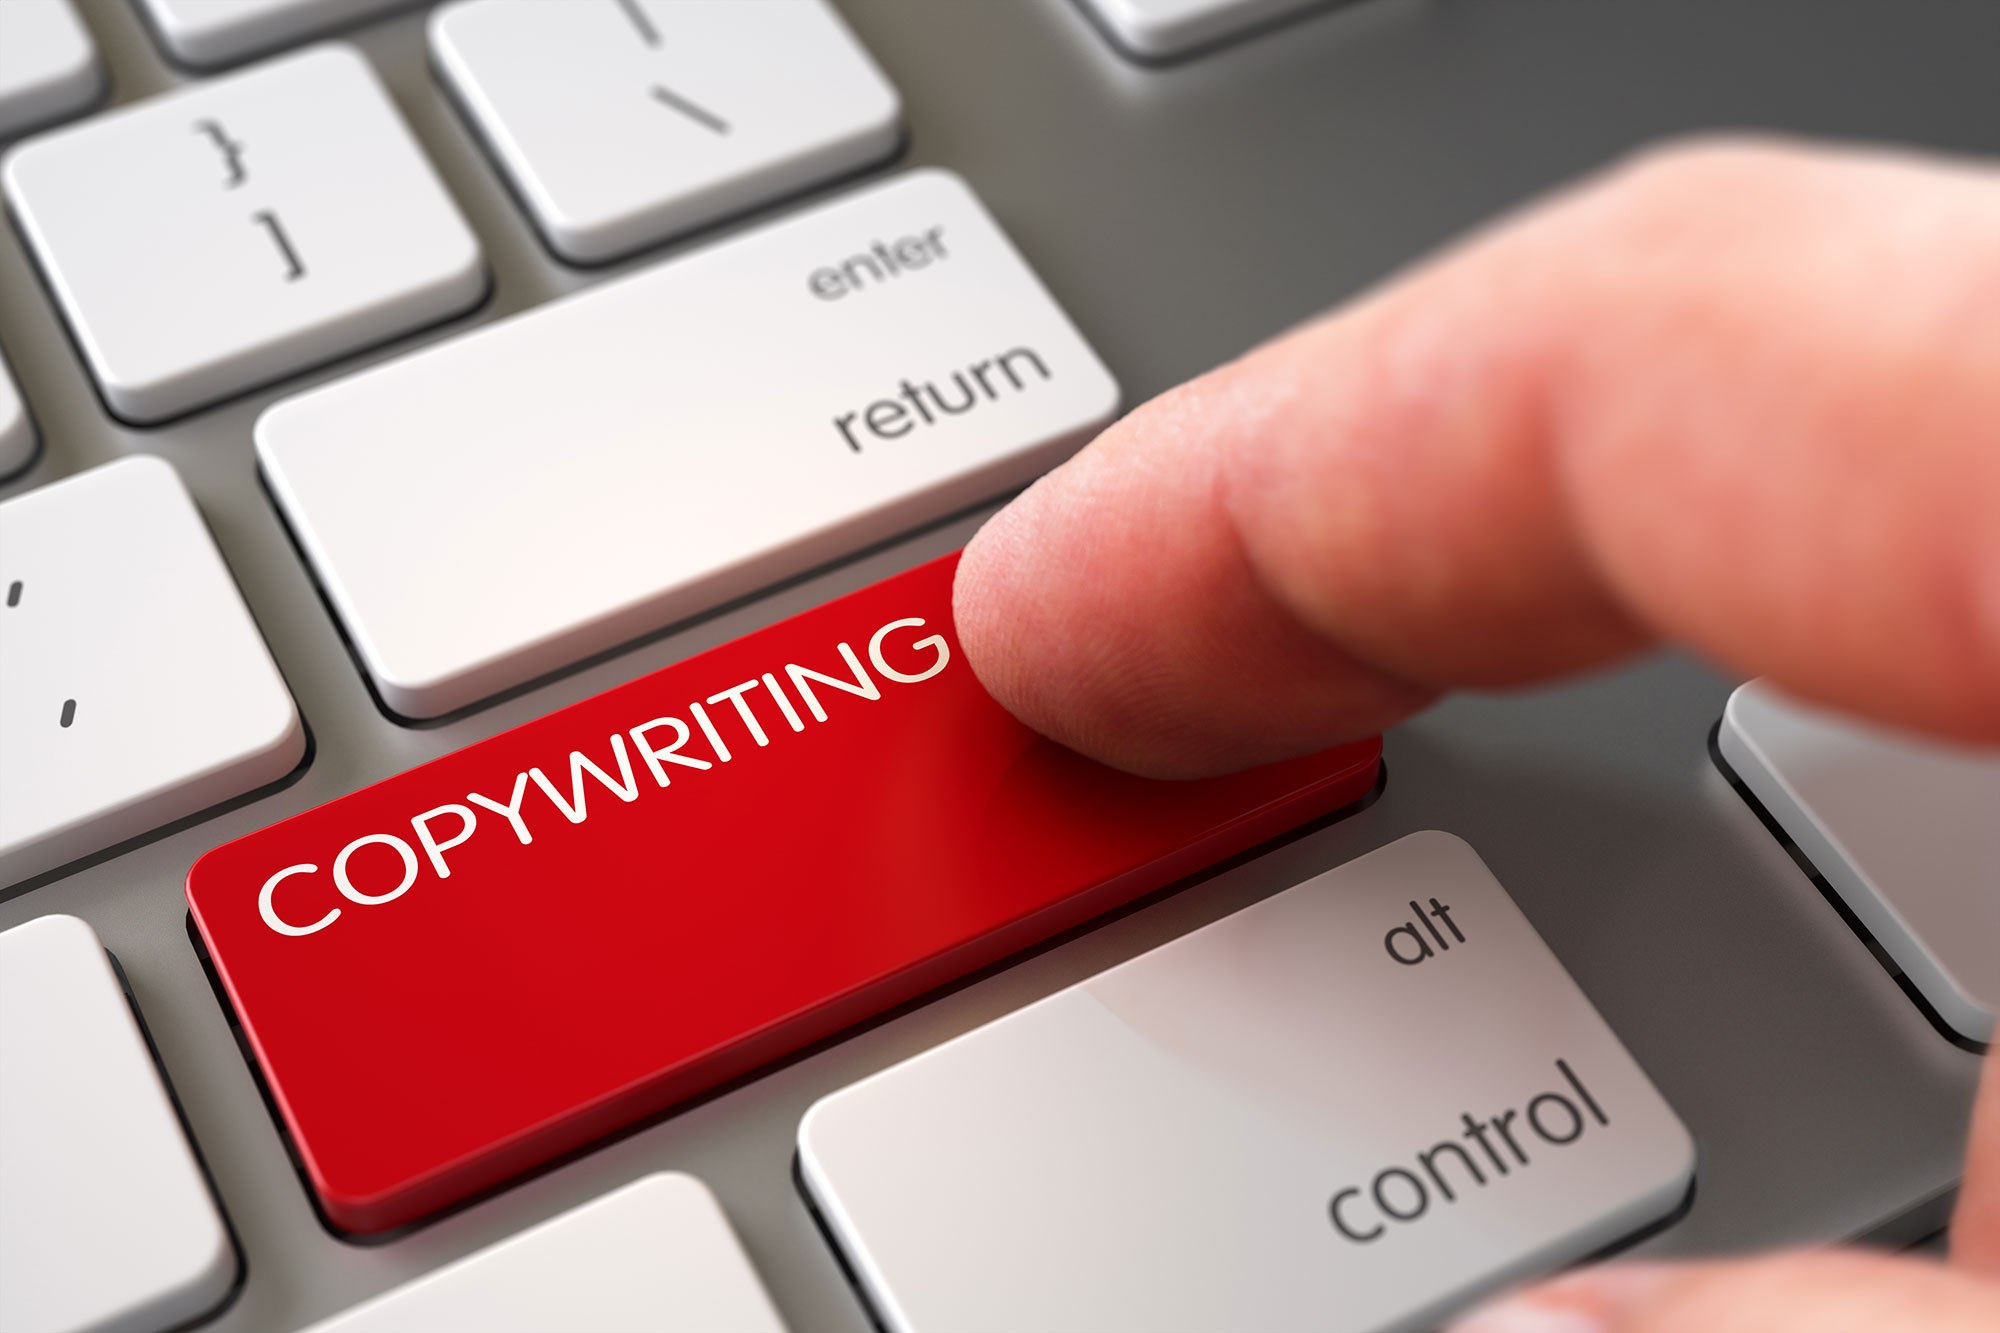 online content writing workshop